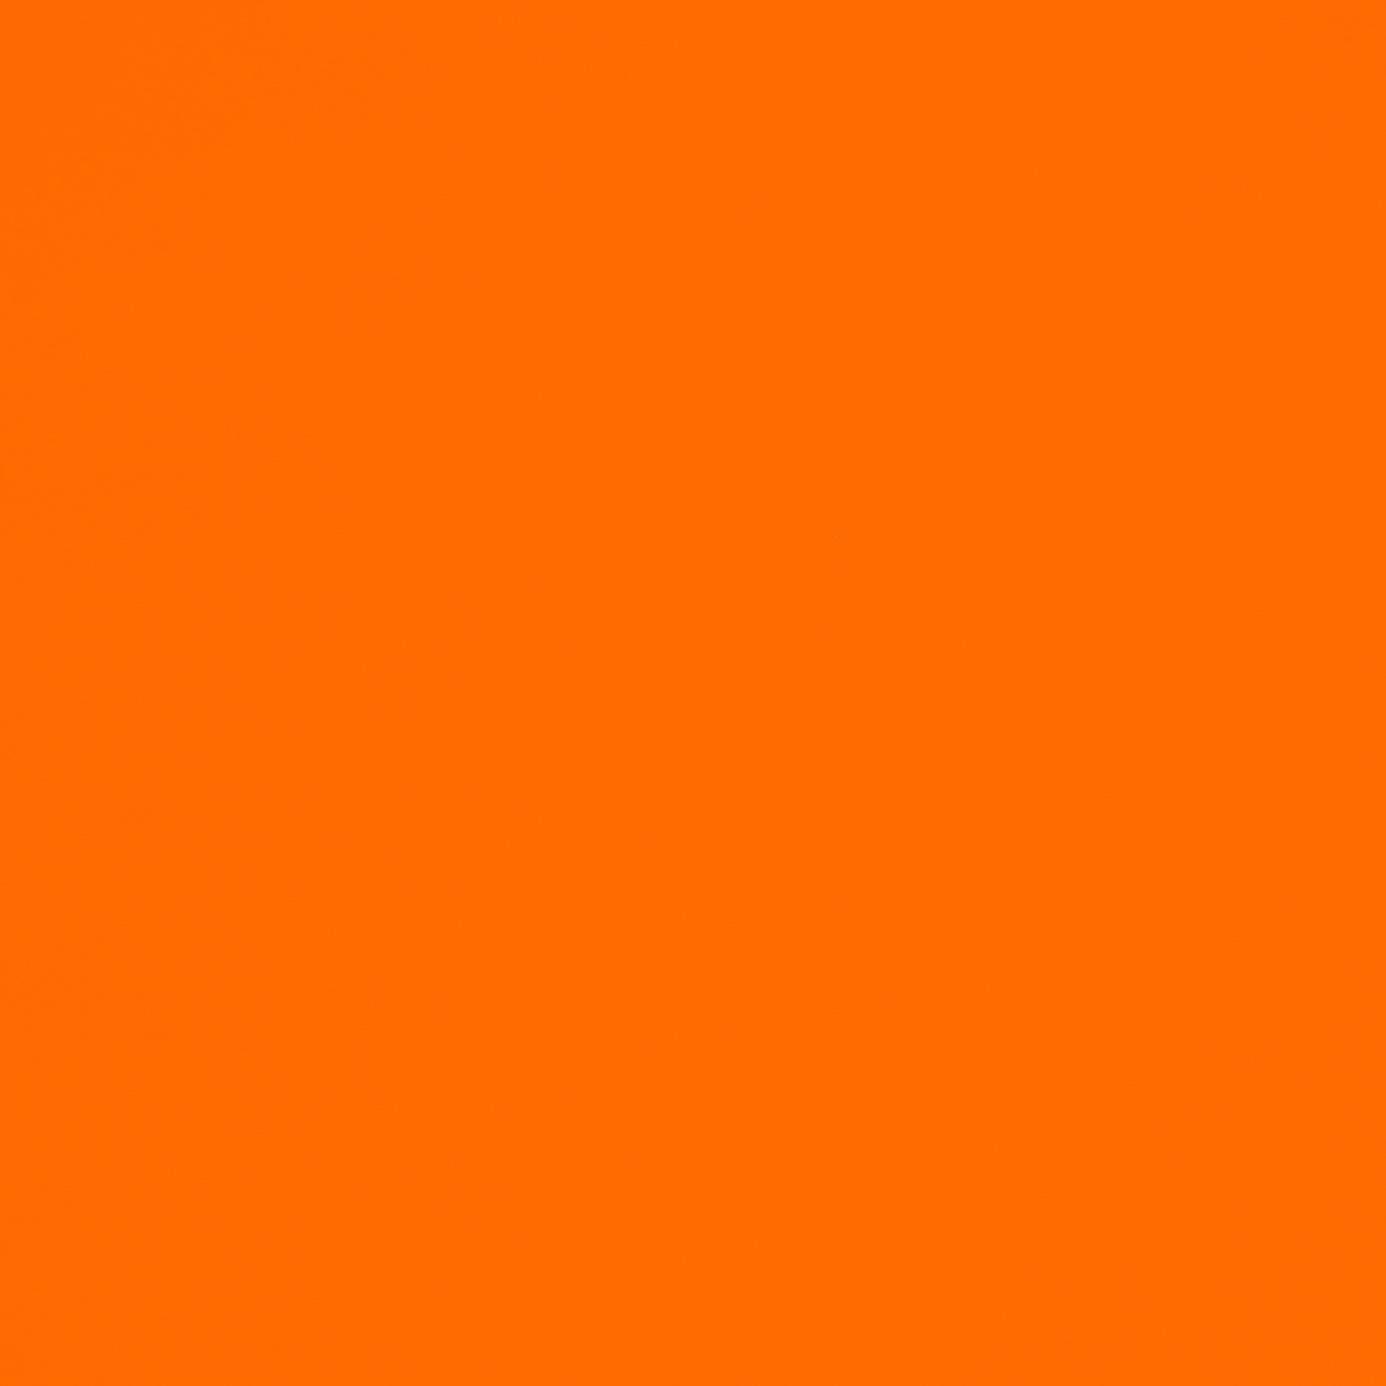 orange backgrounds hd